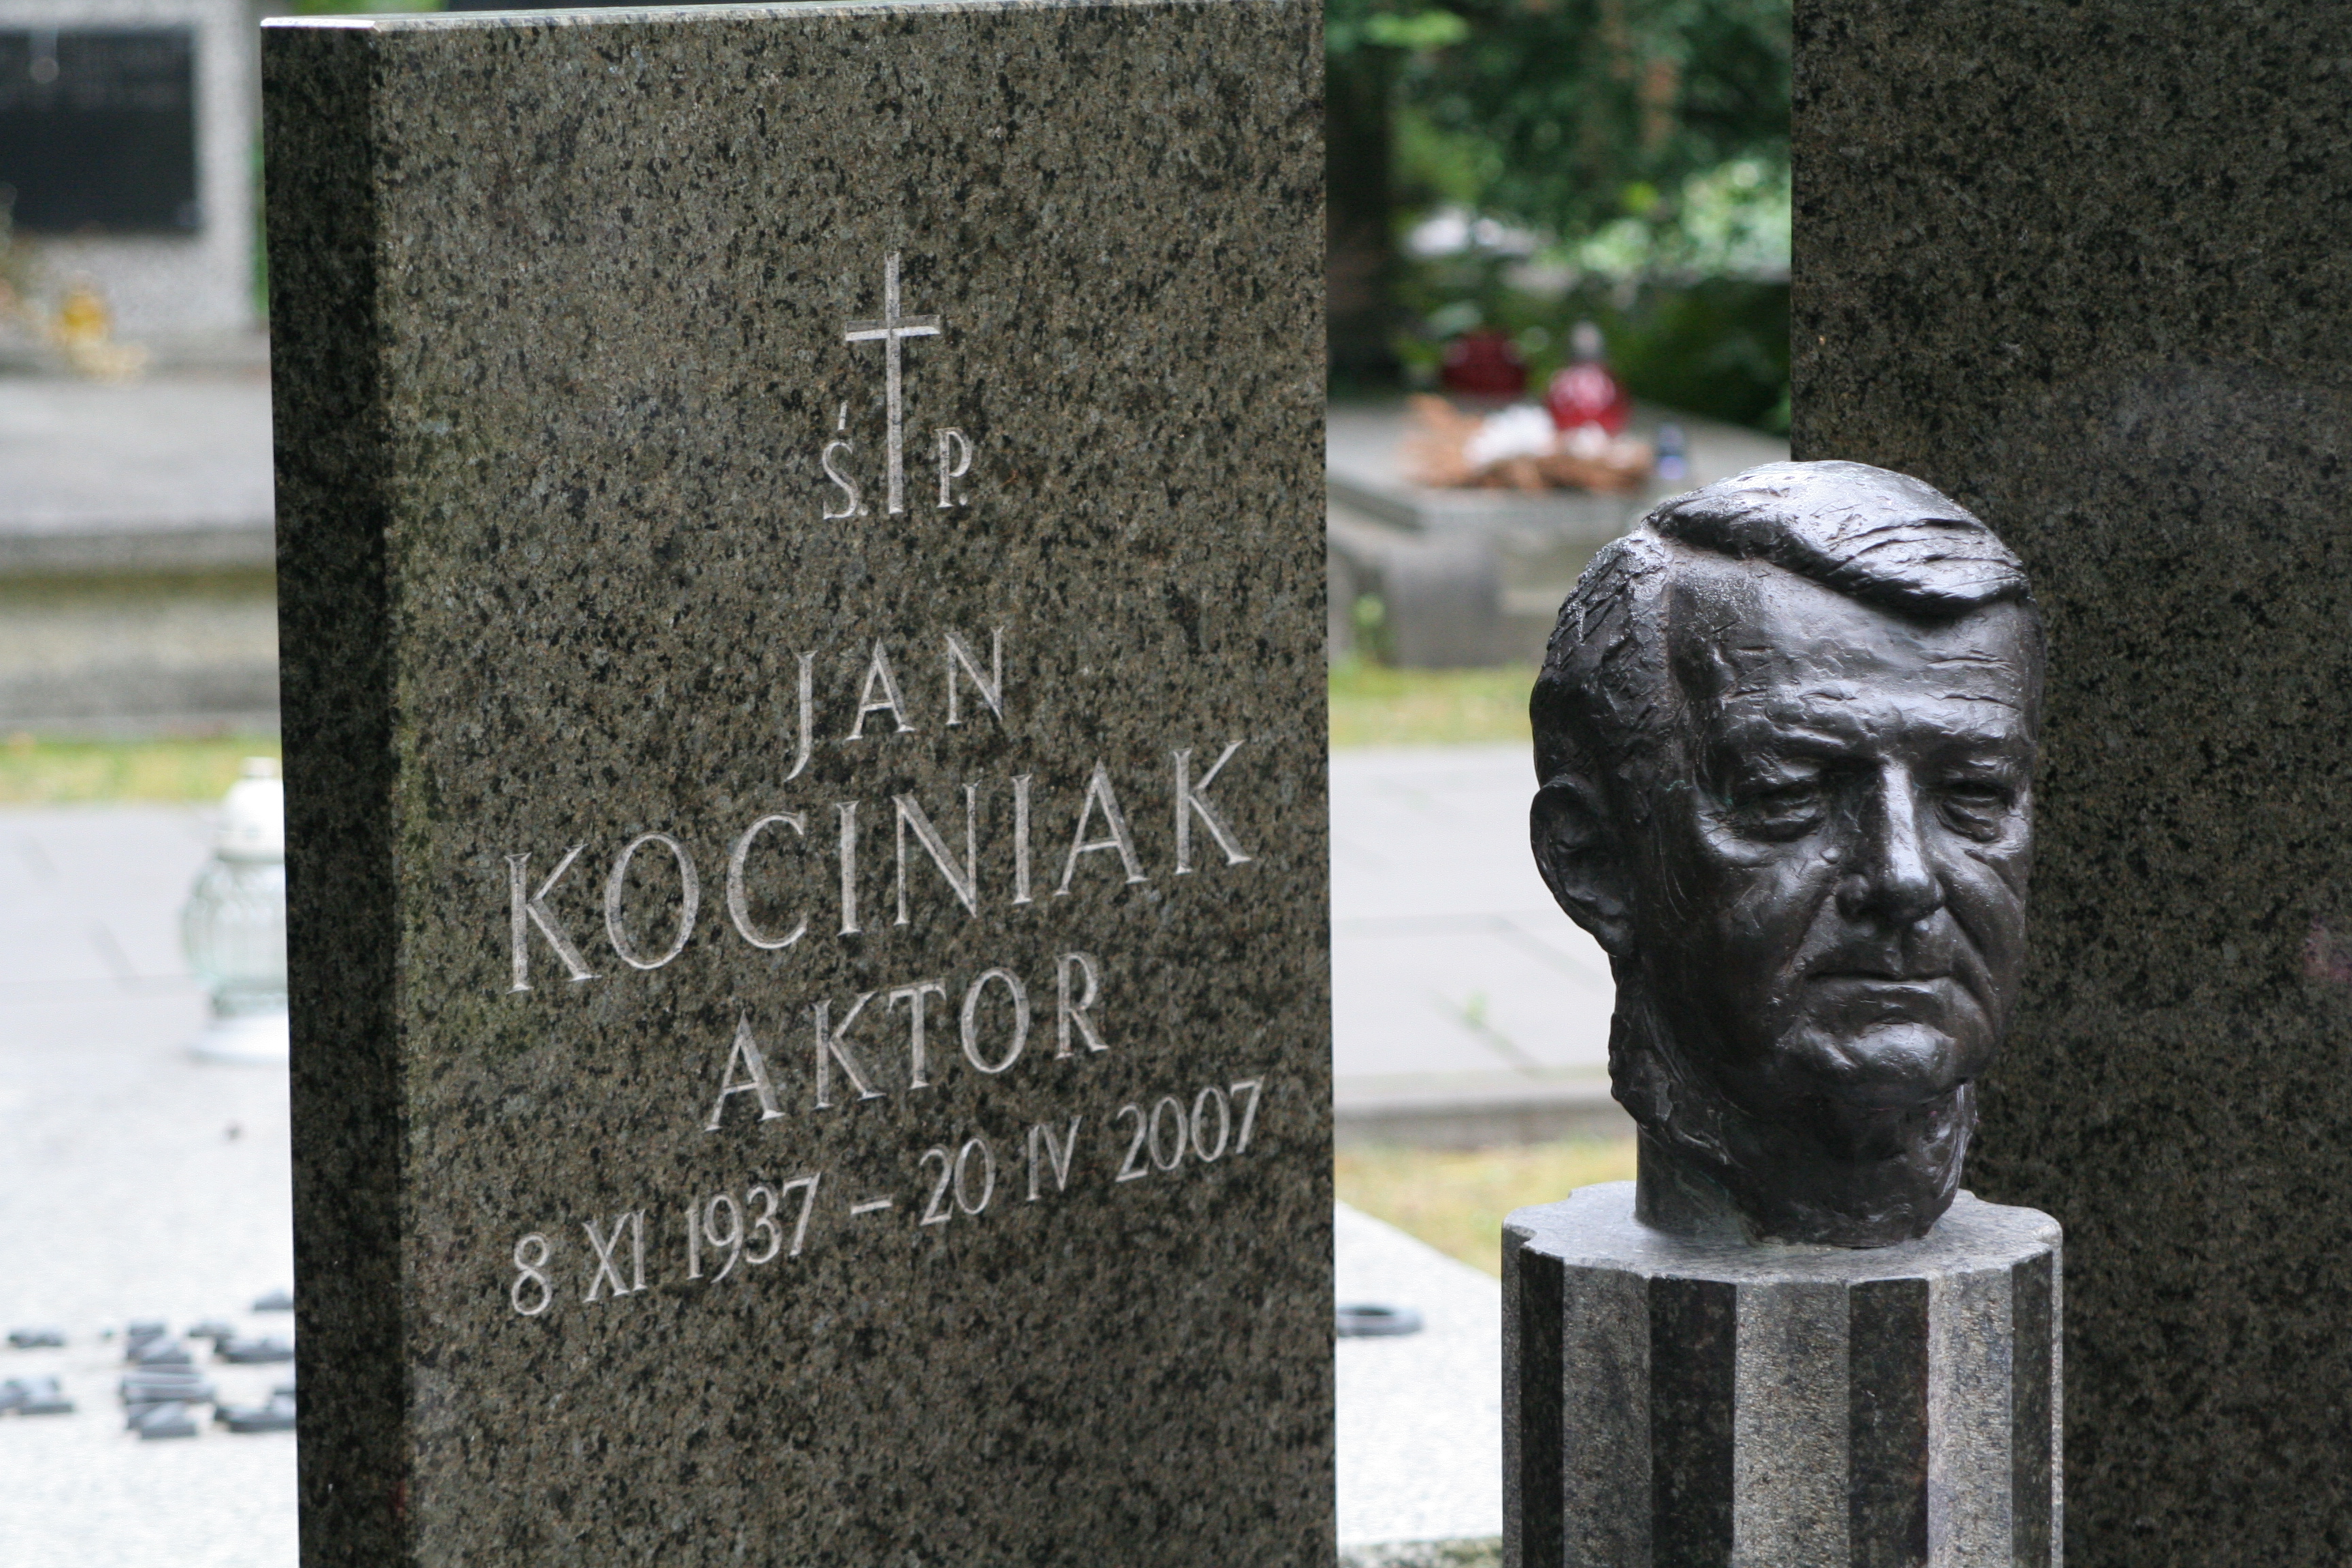 Wikipedia, Jan Kociniak, Self-published work, Warsaw Military Cemetery - K